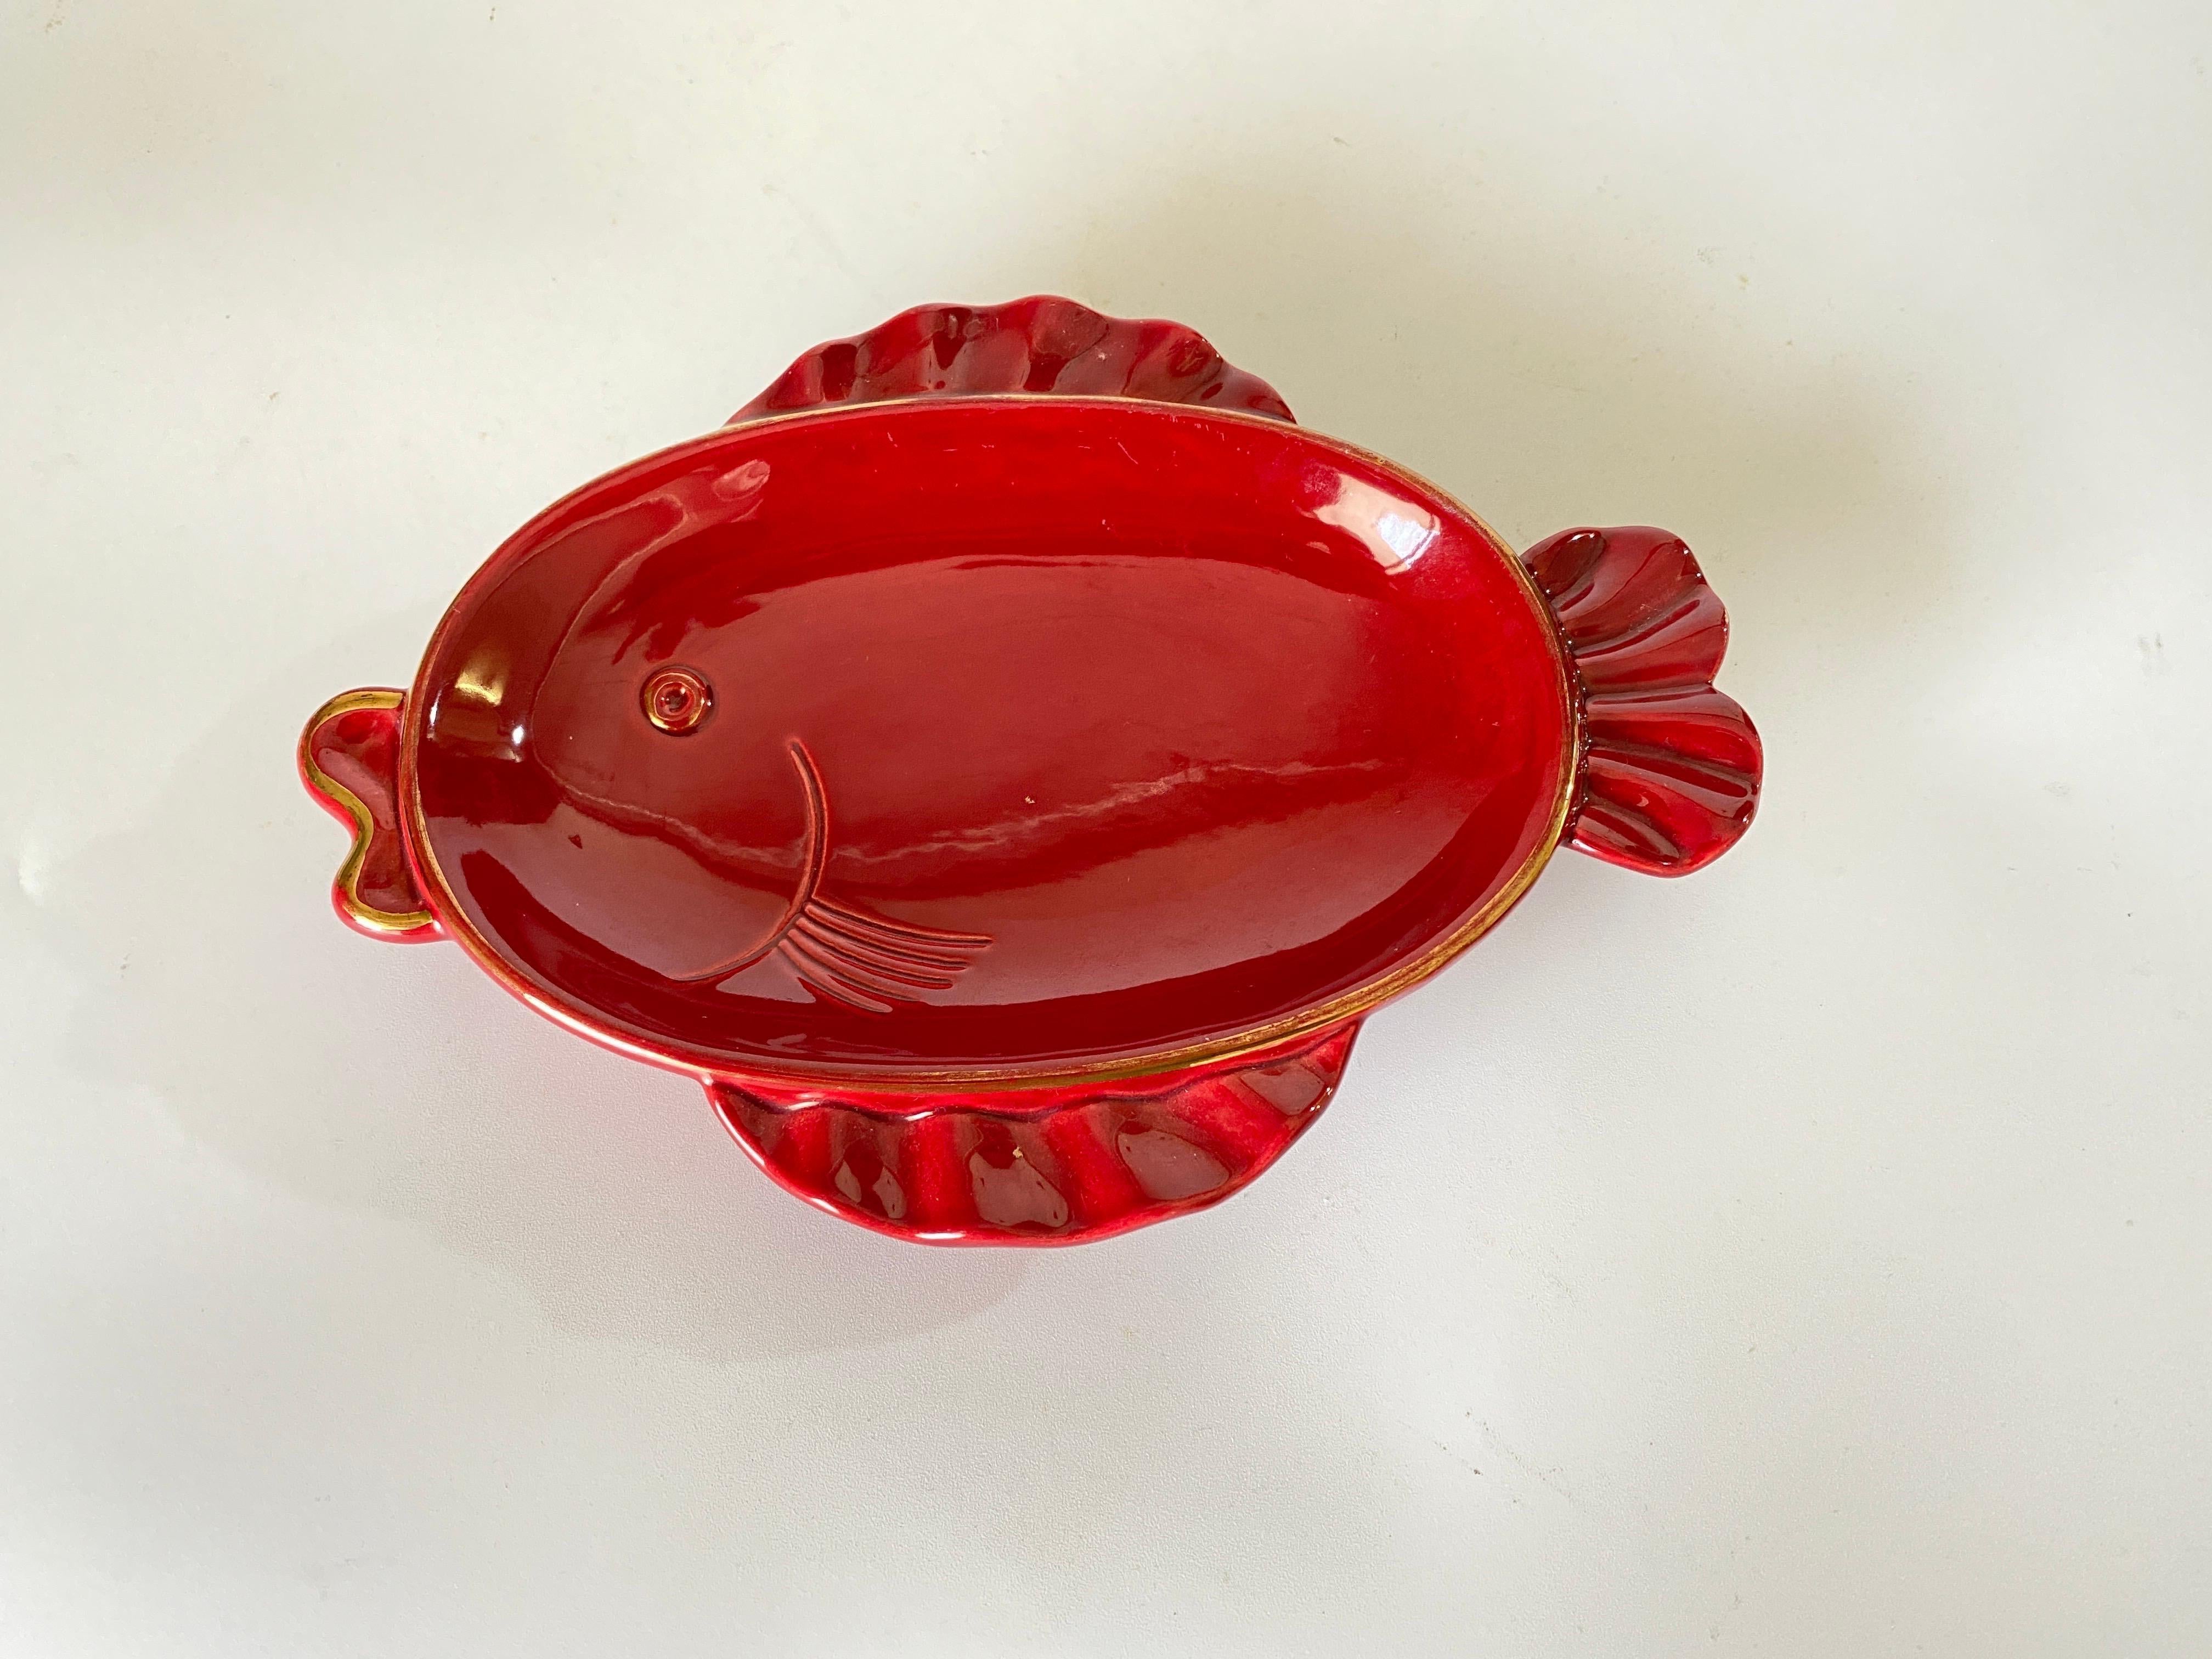 Ceramic Dish Ashtray or Centrepiece in Ceramic Art Deco Red Color For Sale 2